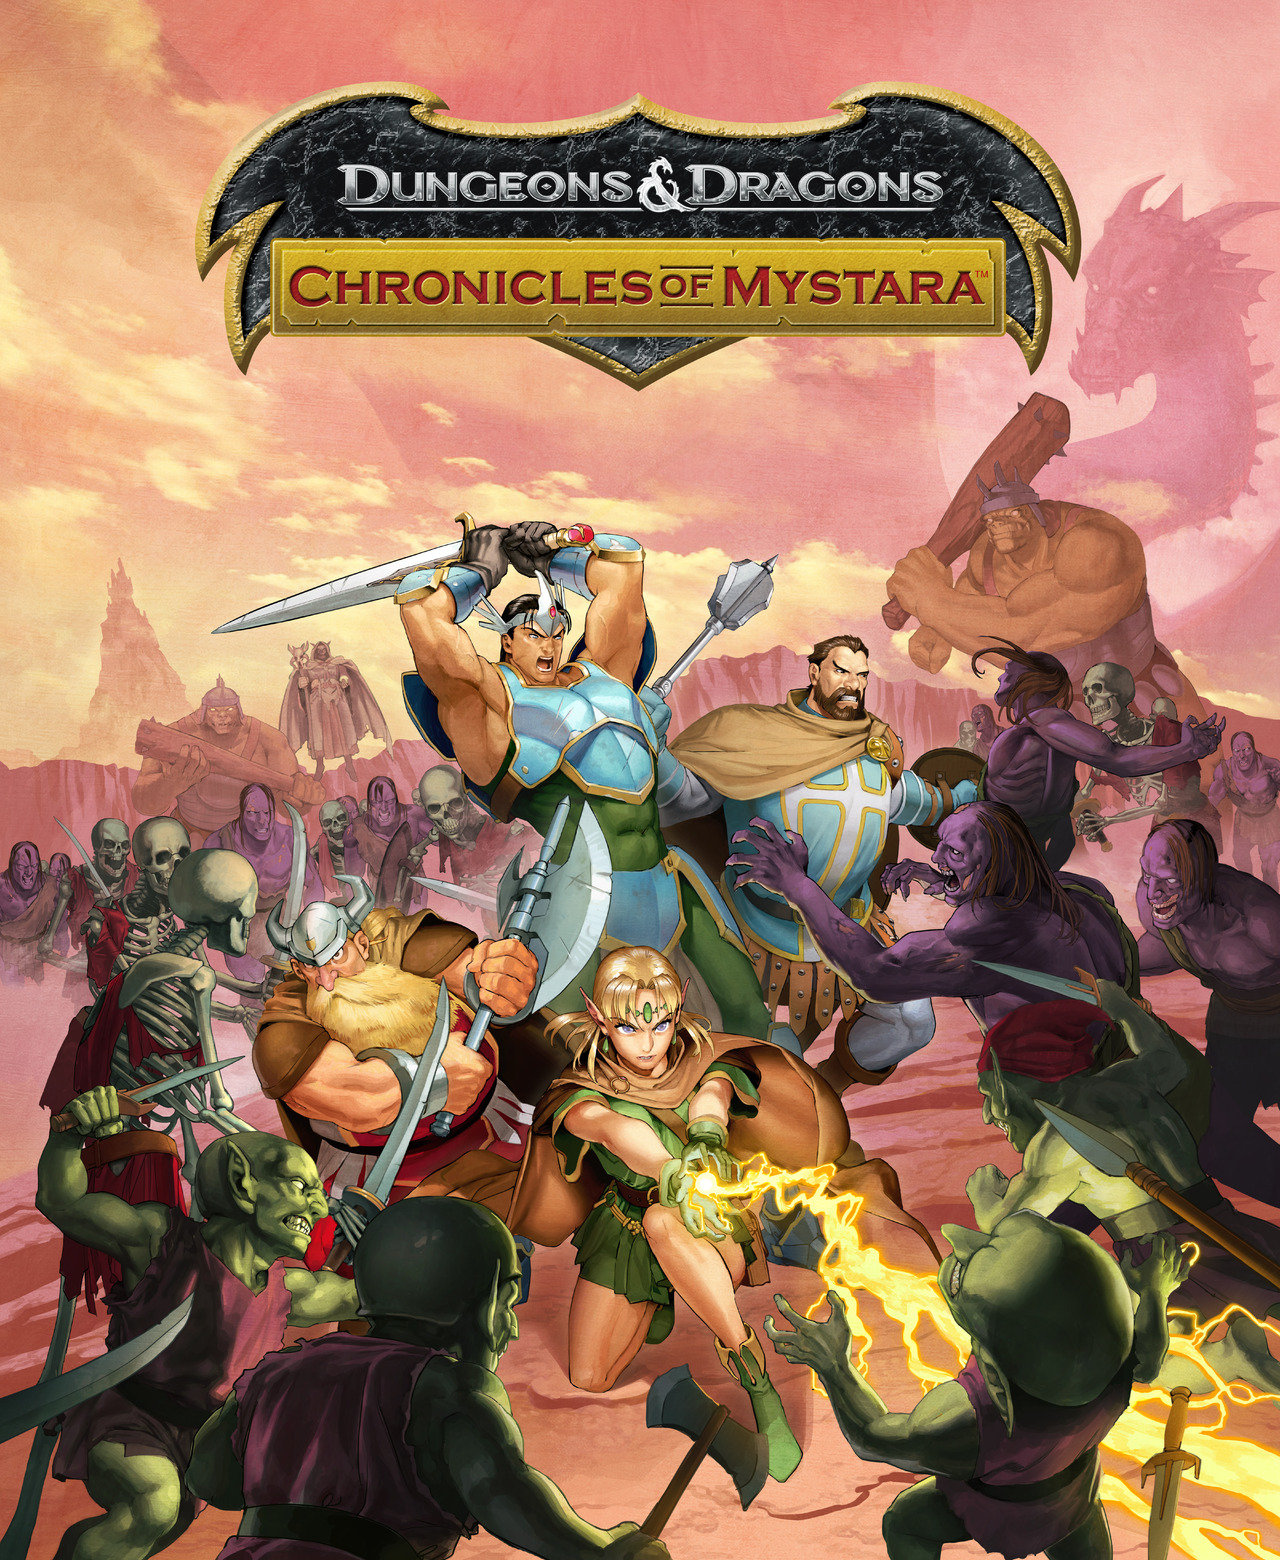 jaquette du jeu vidéo Dungeons & Dragons: Chronicles of Mystara